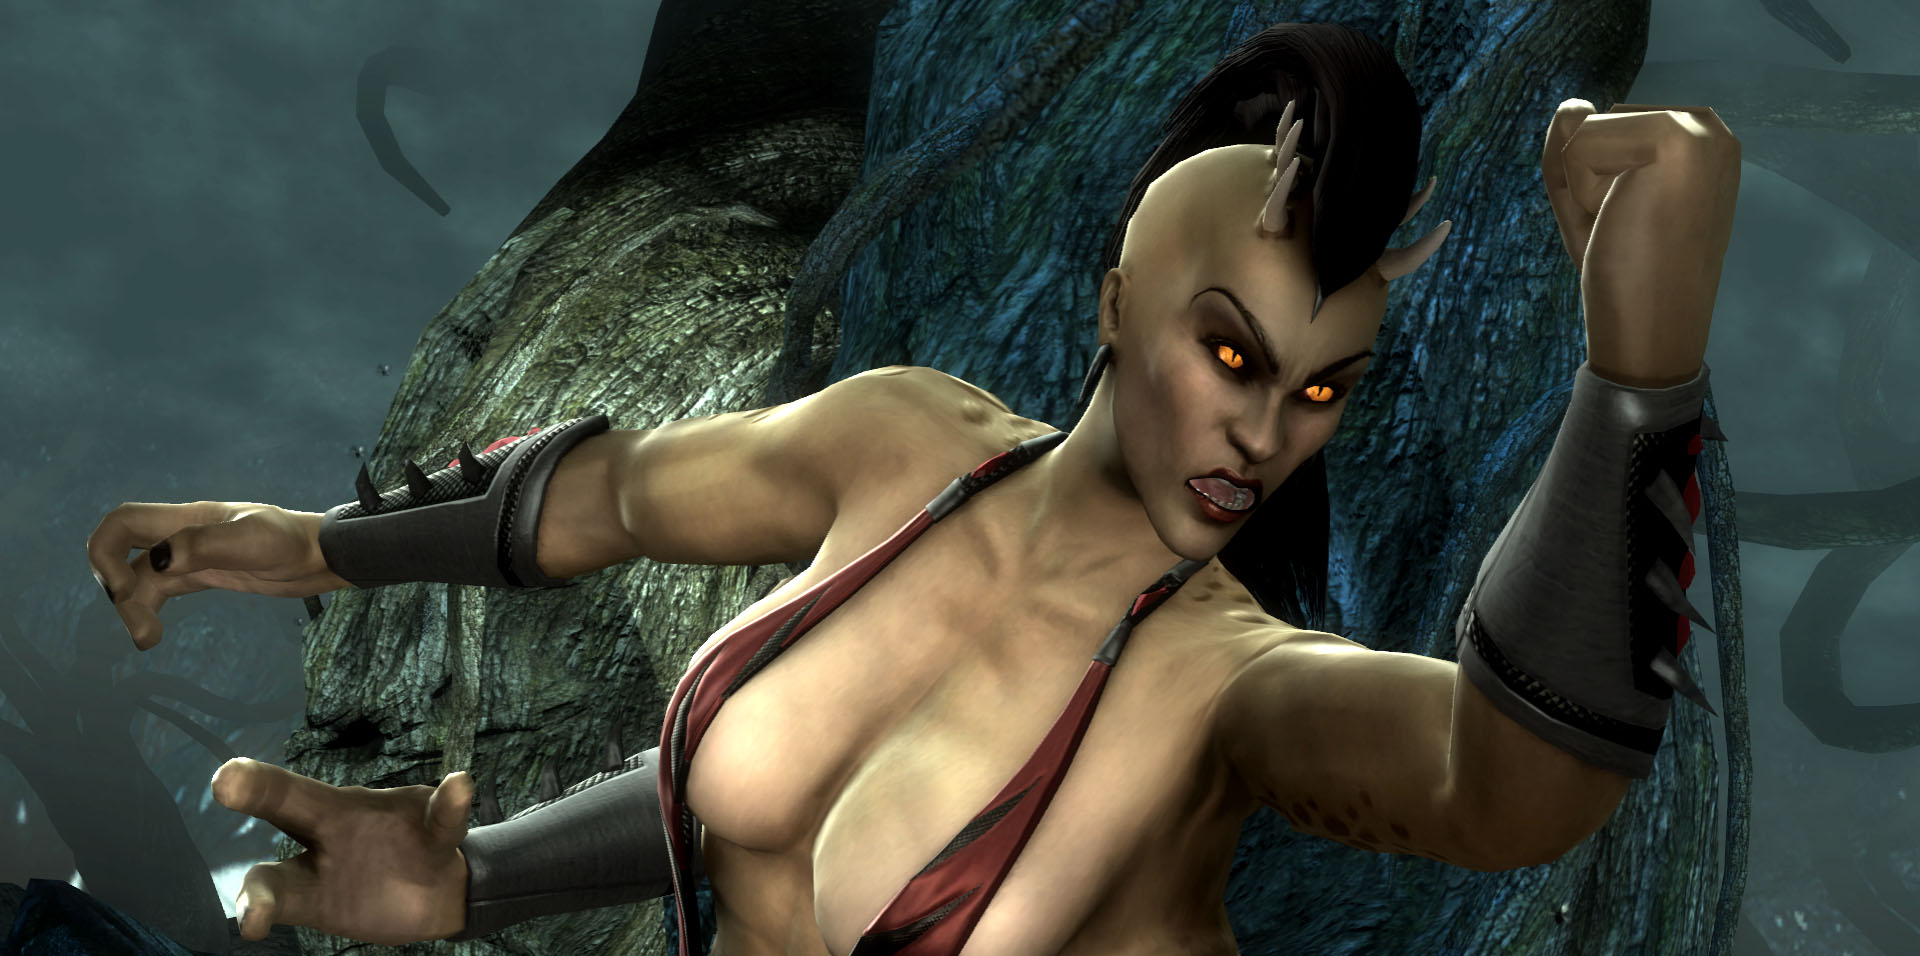 Sheeva-from-Mortal-Kombat-in-the-GA-HQ-VG-Character-DB.jpg